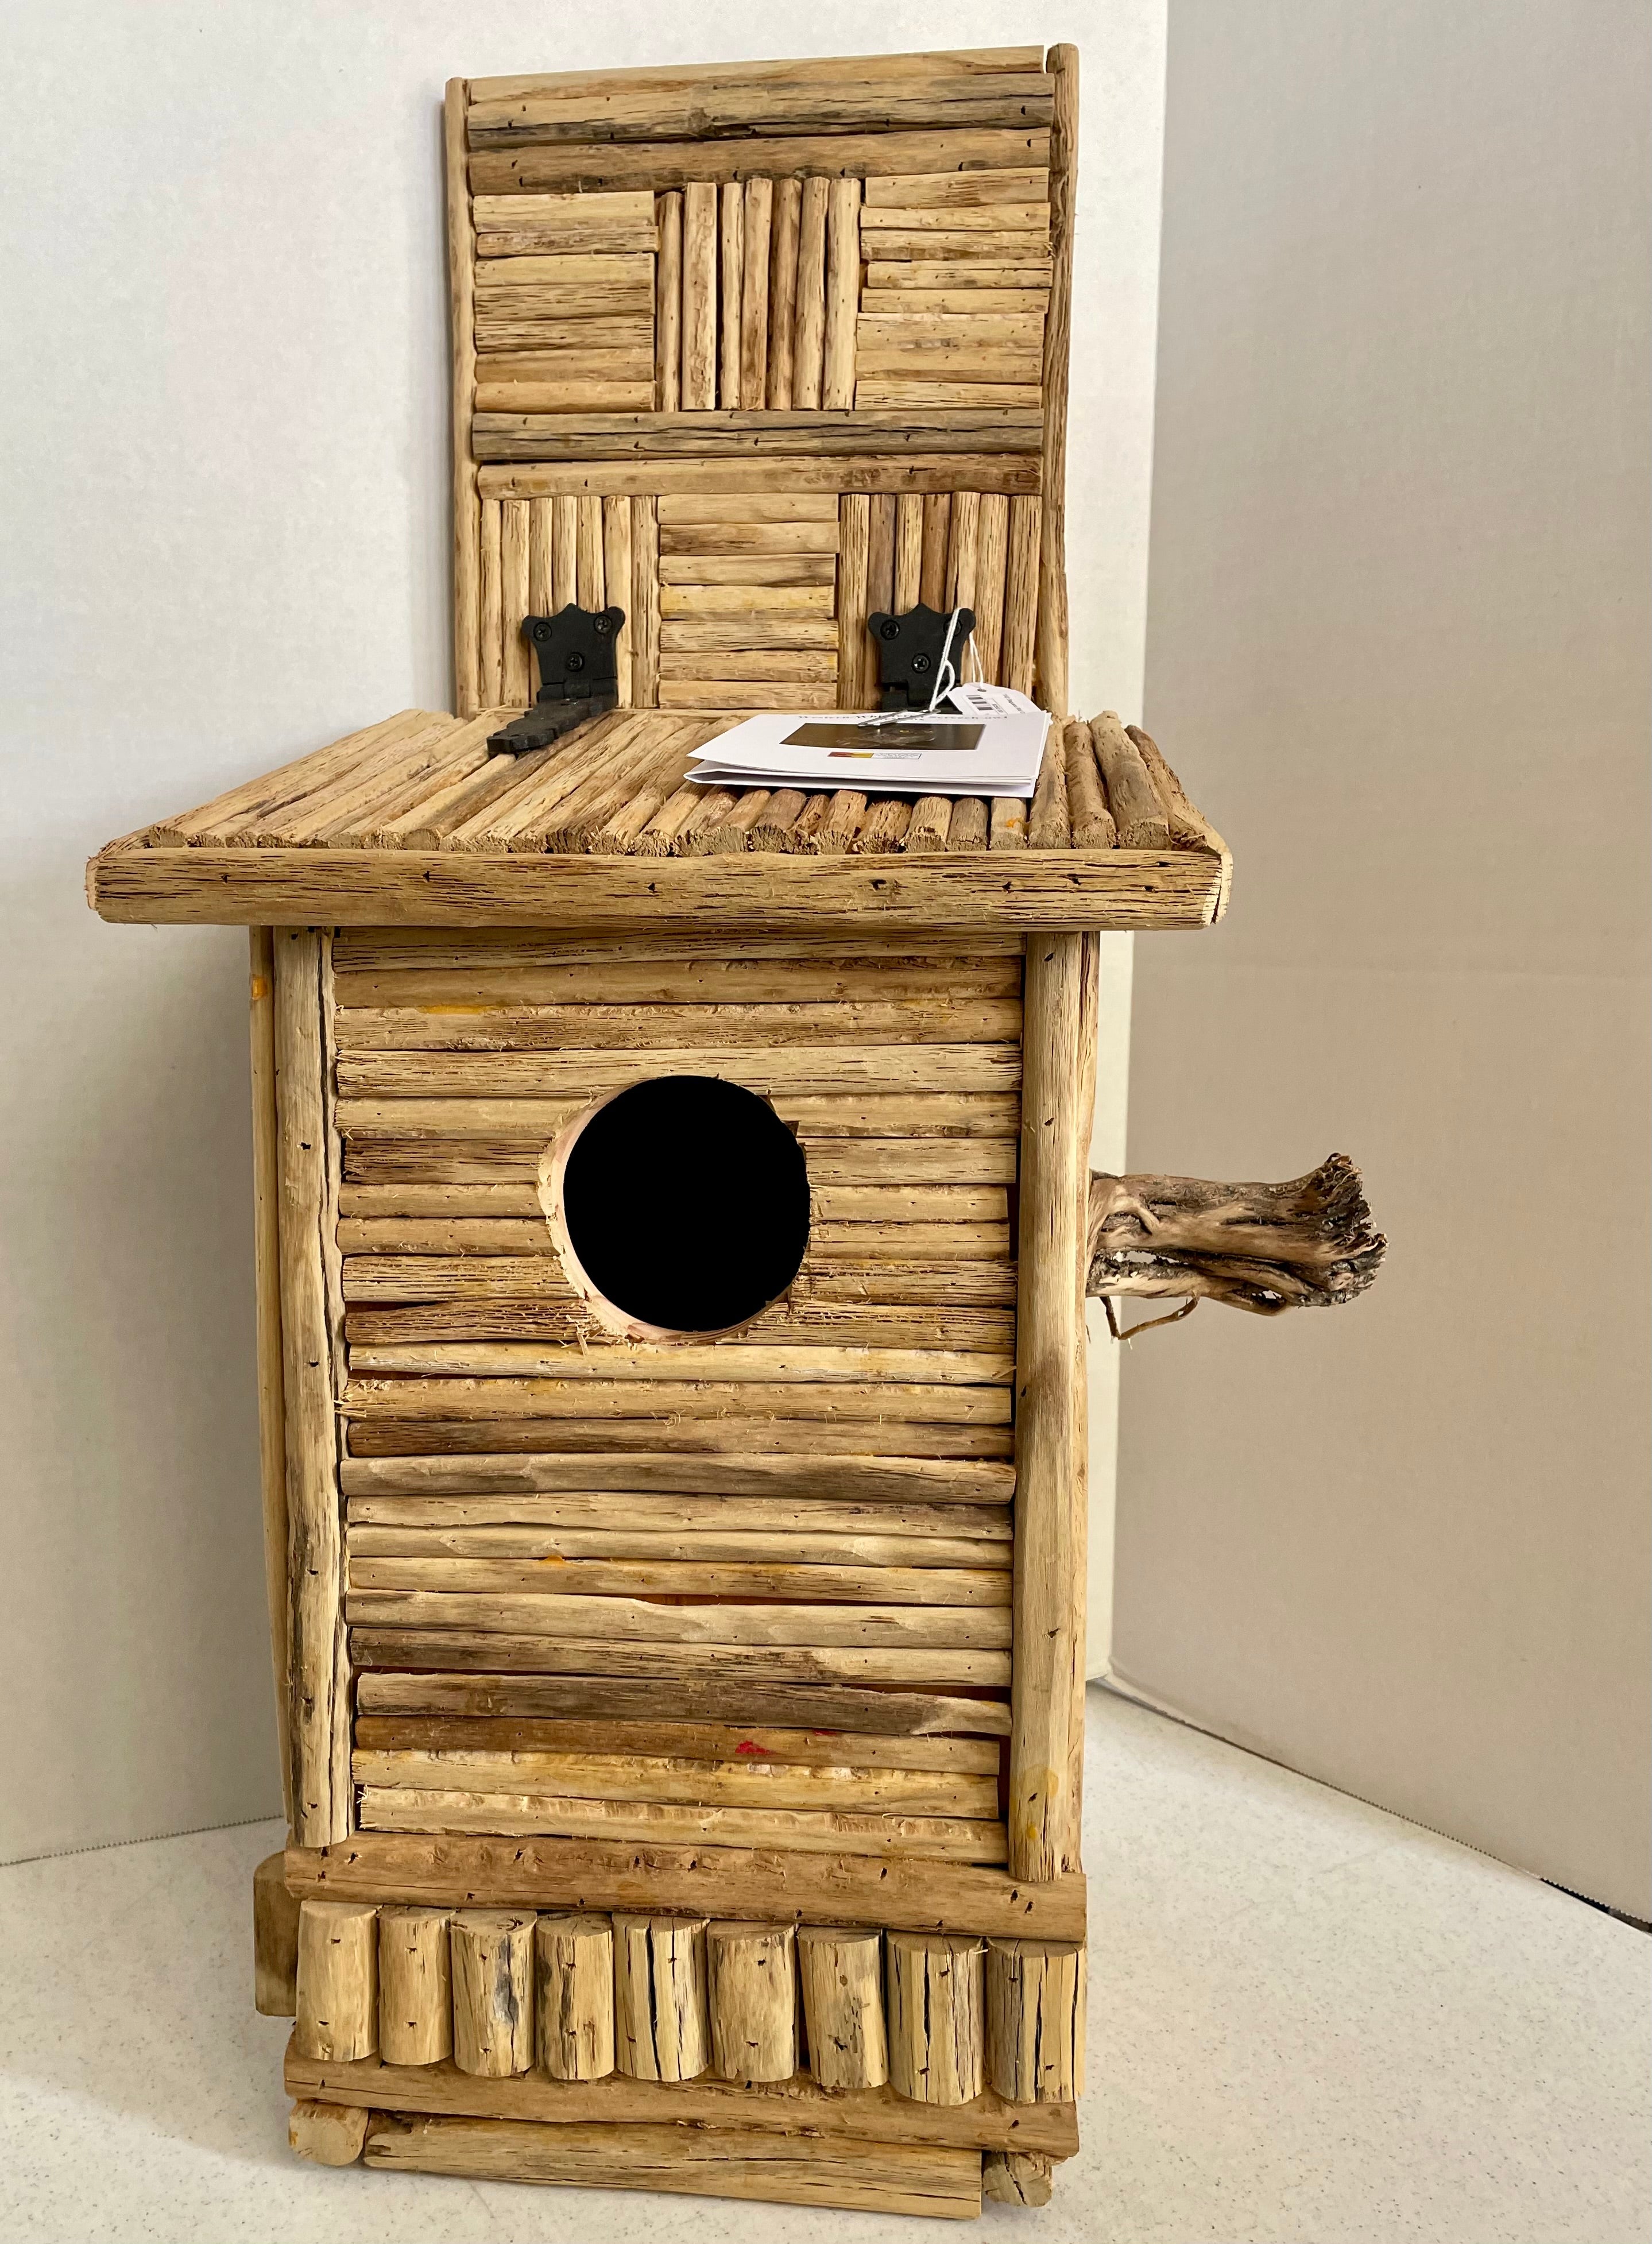 Screech-owl/ Kestrel  Nestbox (Created by Fred Dardis) - Fundraiser